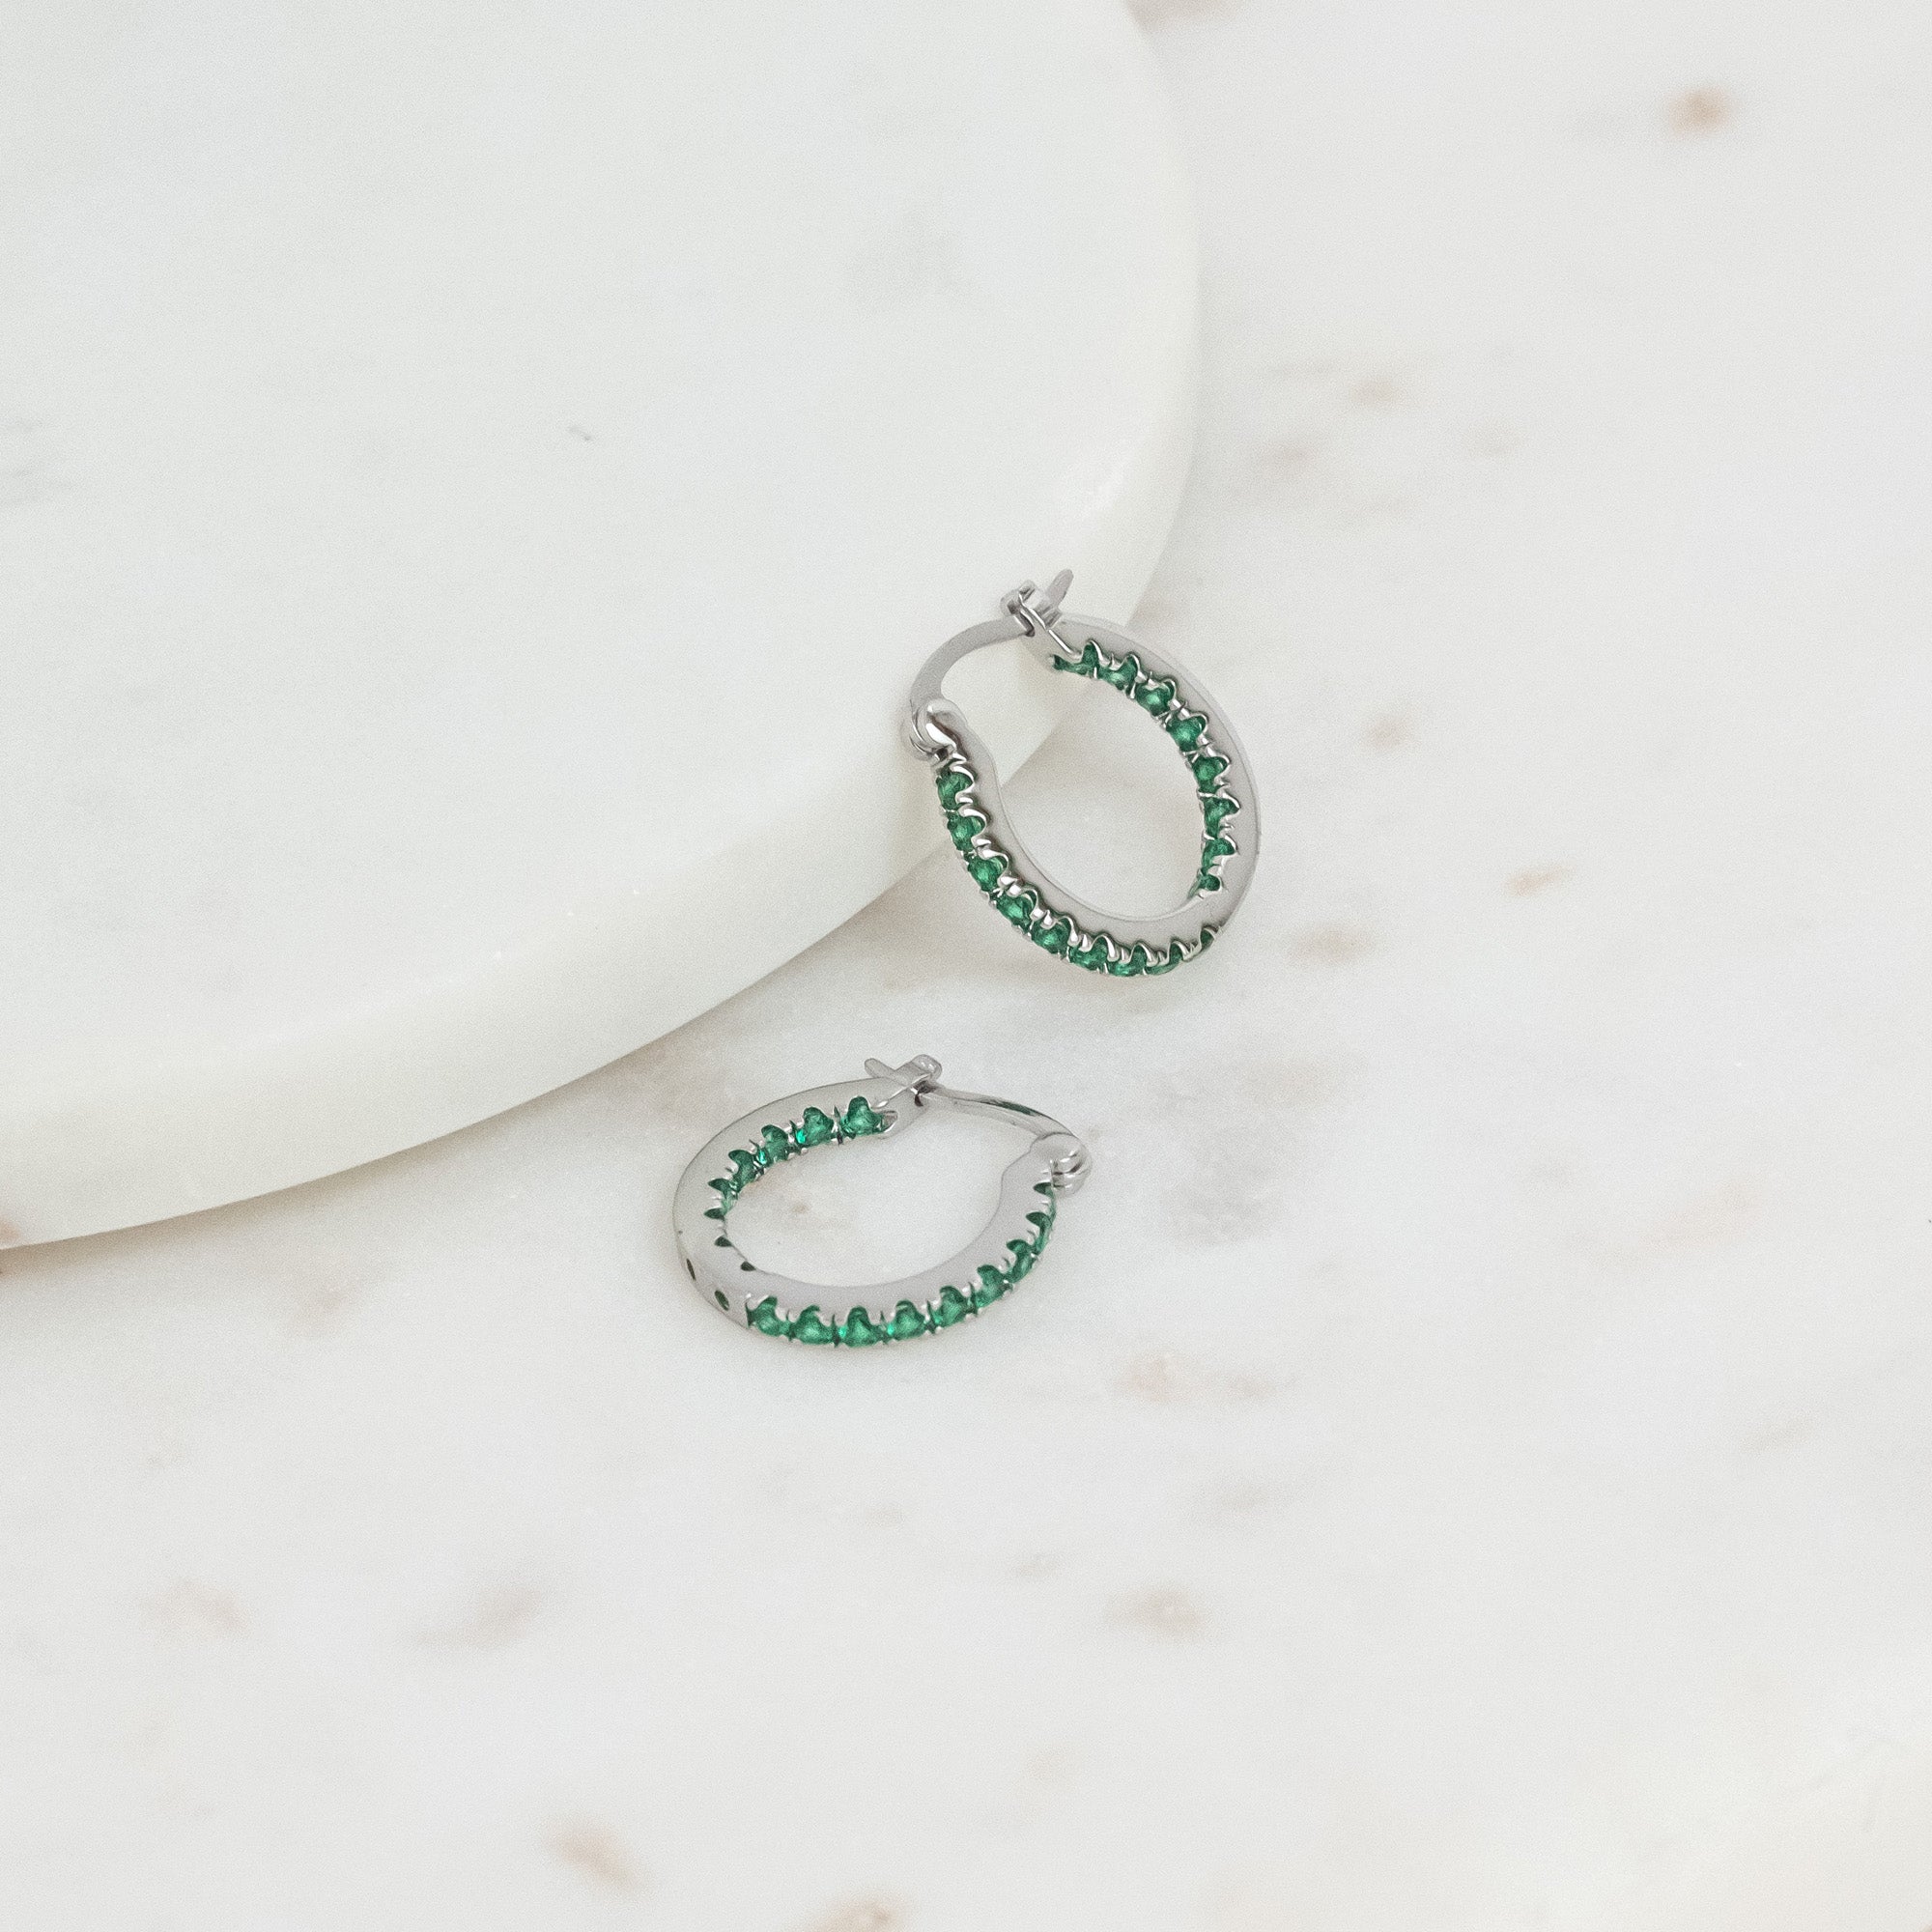 Lunar Earrings Silver / Green Medium